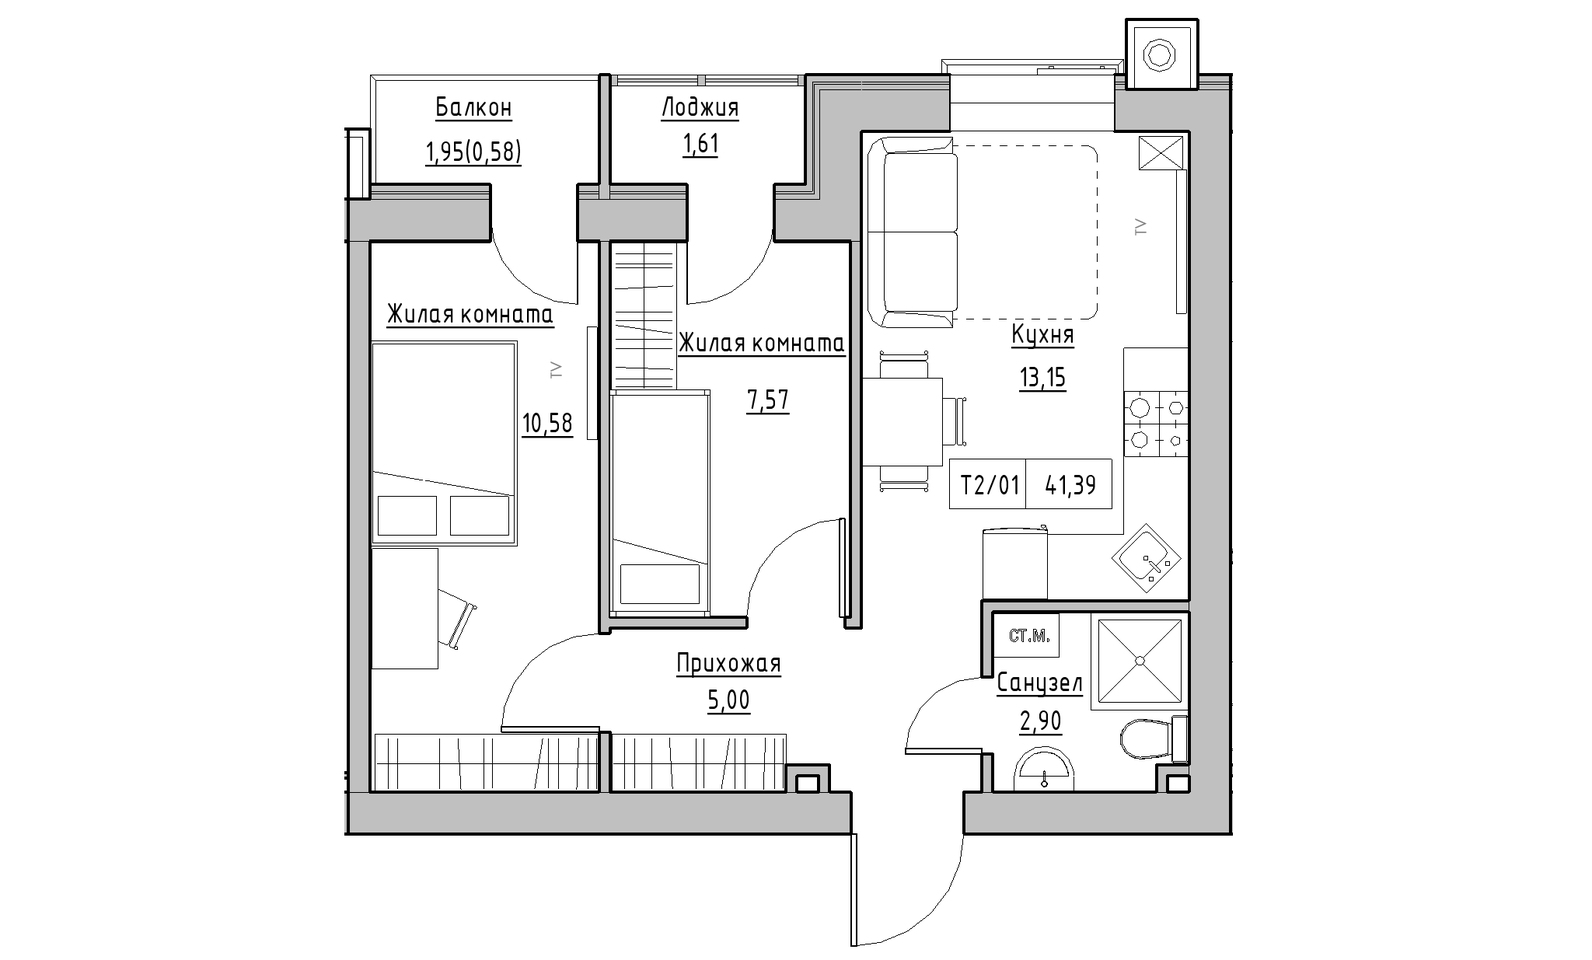 Planning 2-rm flats area 41.39m2, KS-014-02/0005.